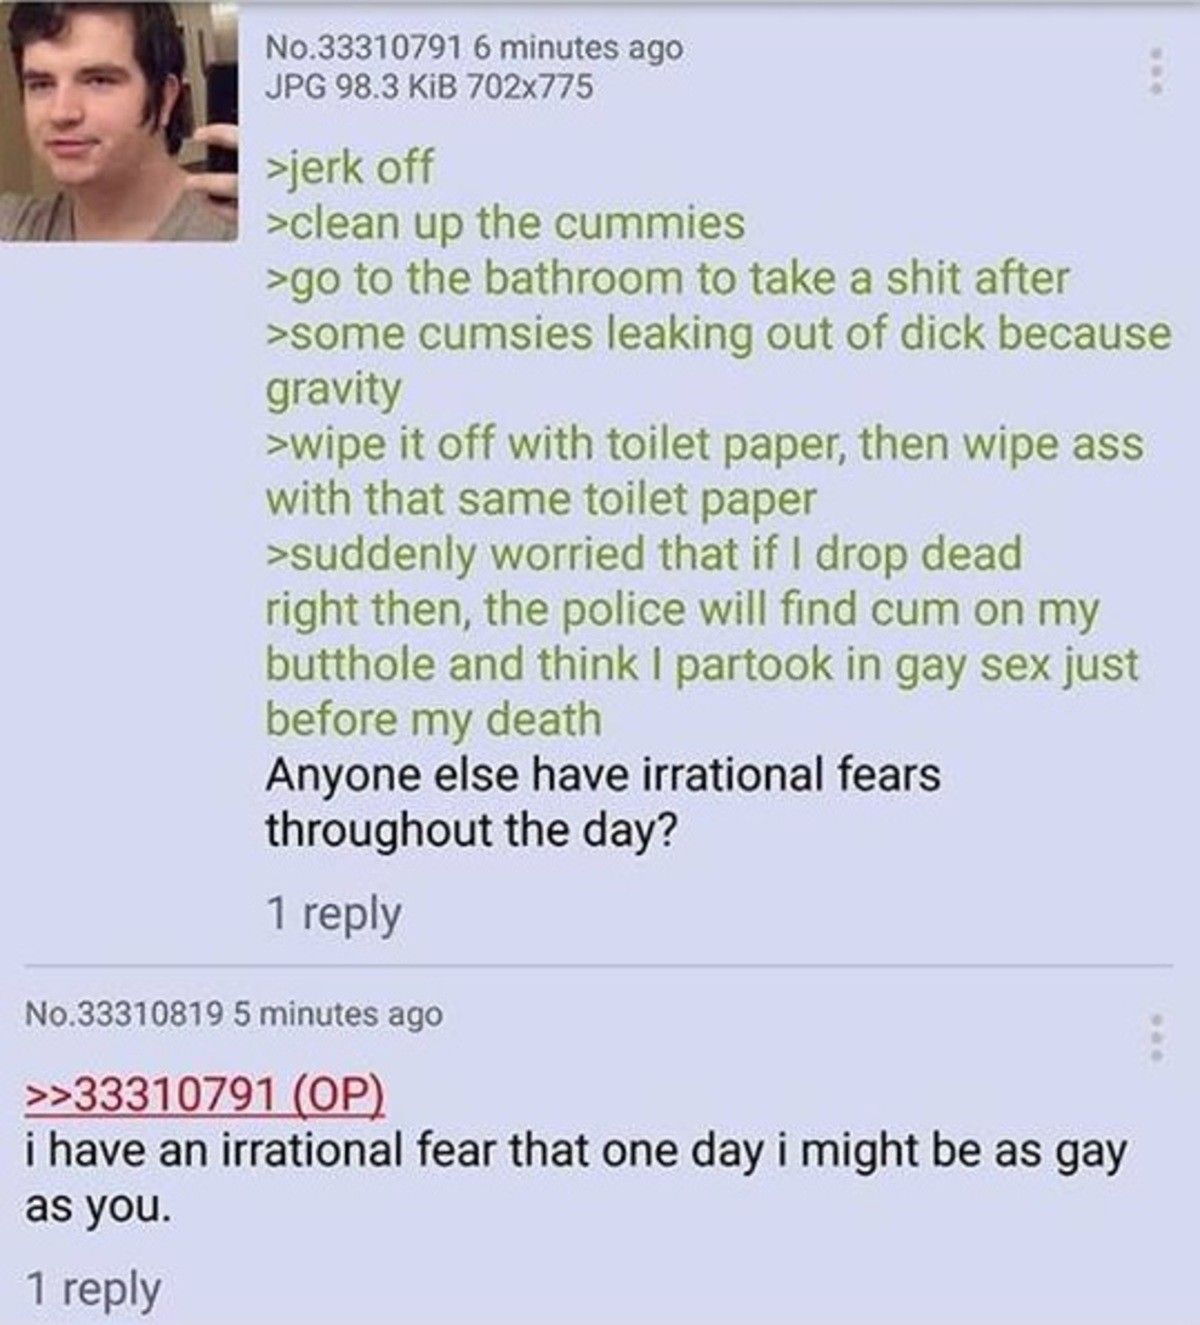 Anon has an irrational fear